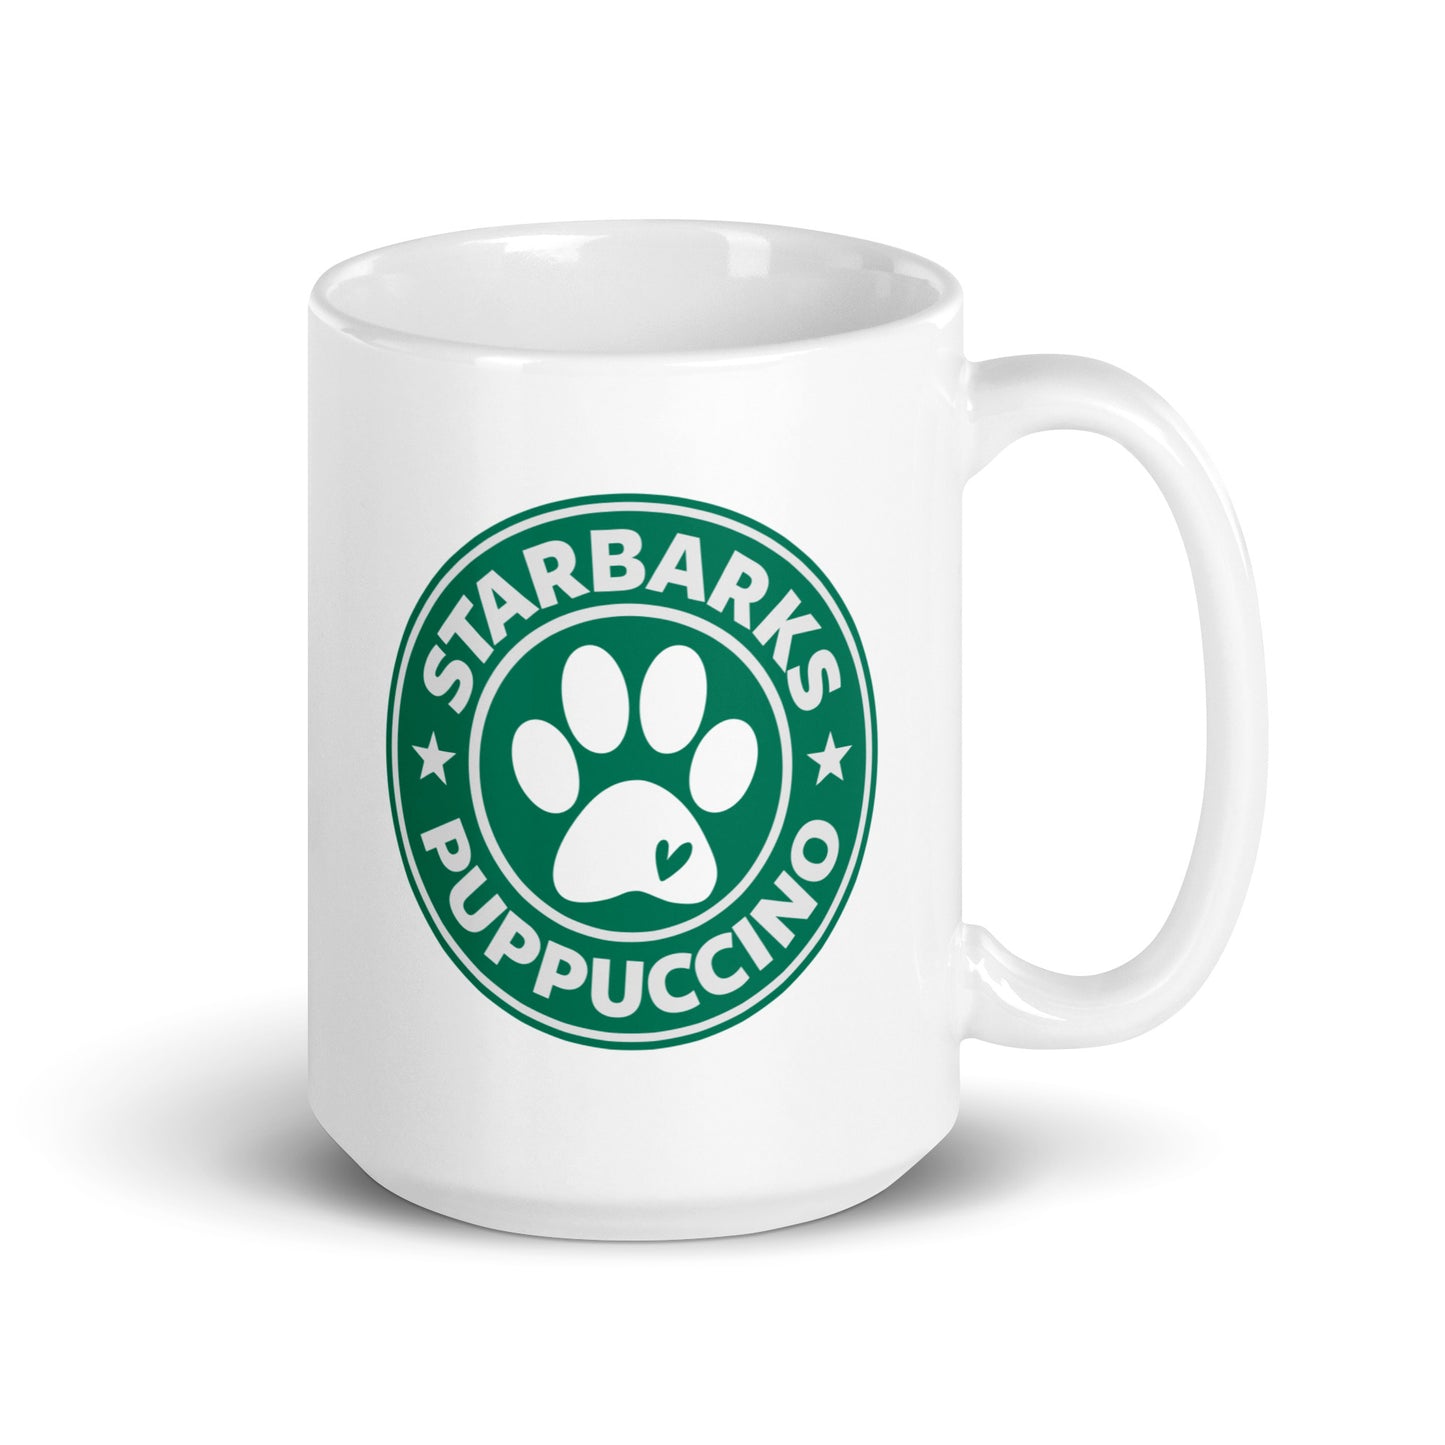 Starbarks Puppuccino Coffee Mug